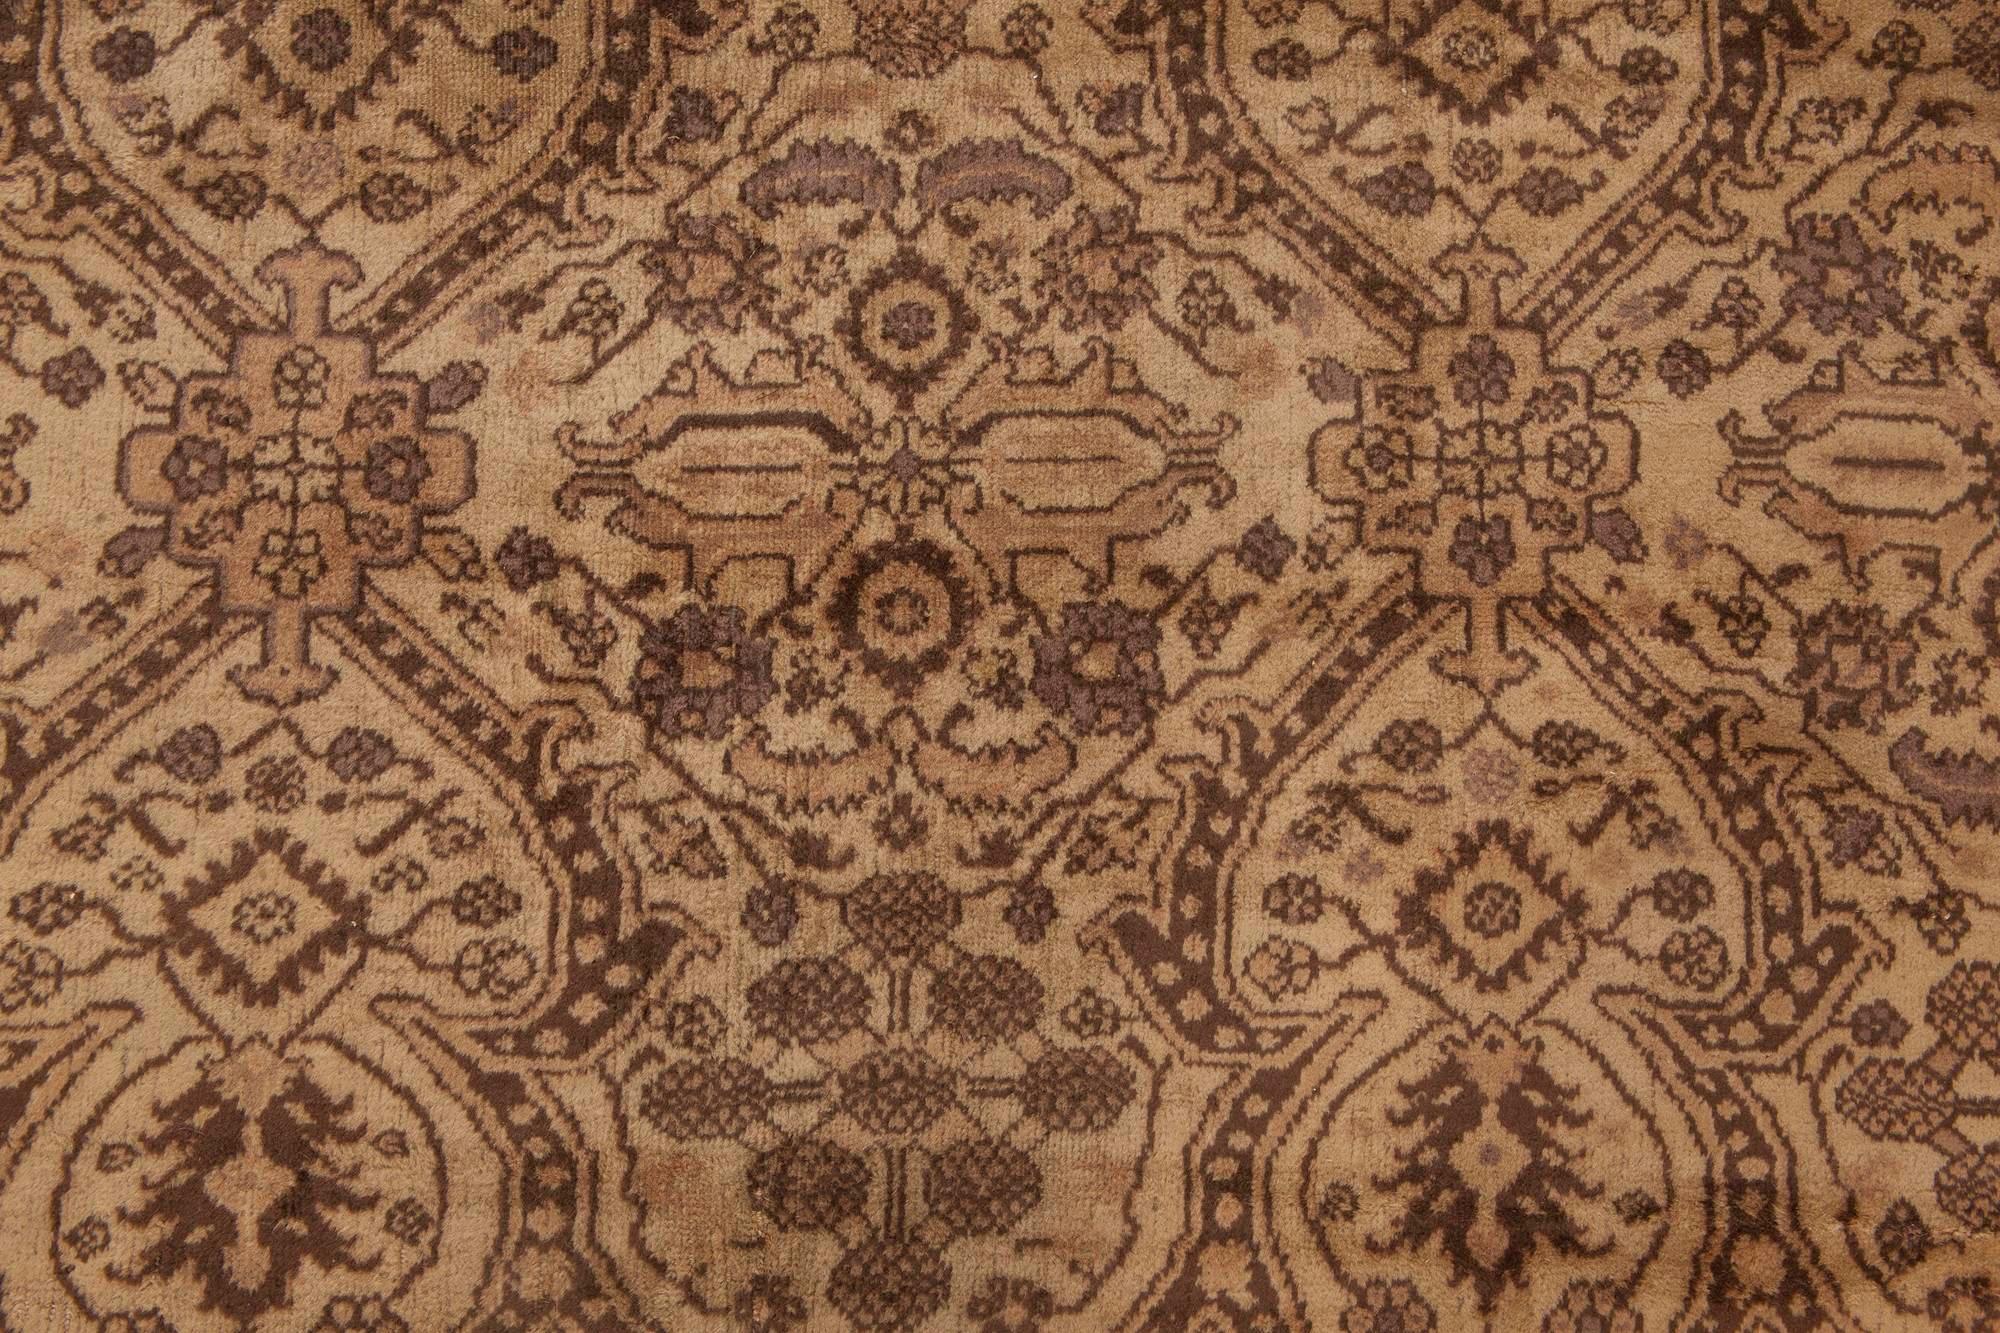 Fine Antique Indian Amritsar brown carpet
Size: 12'2